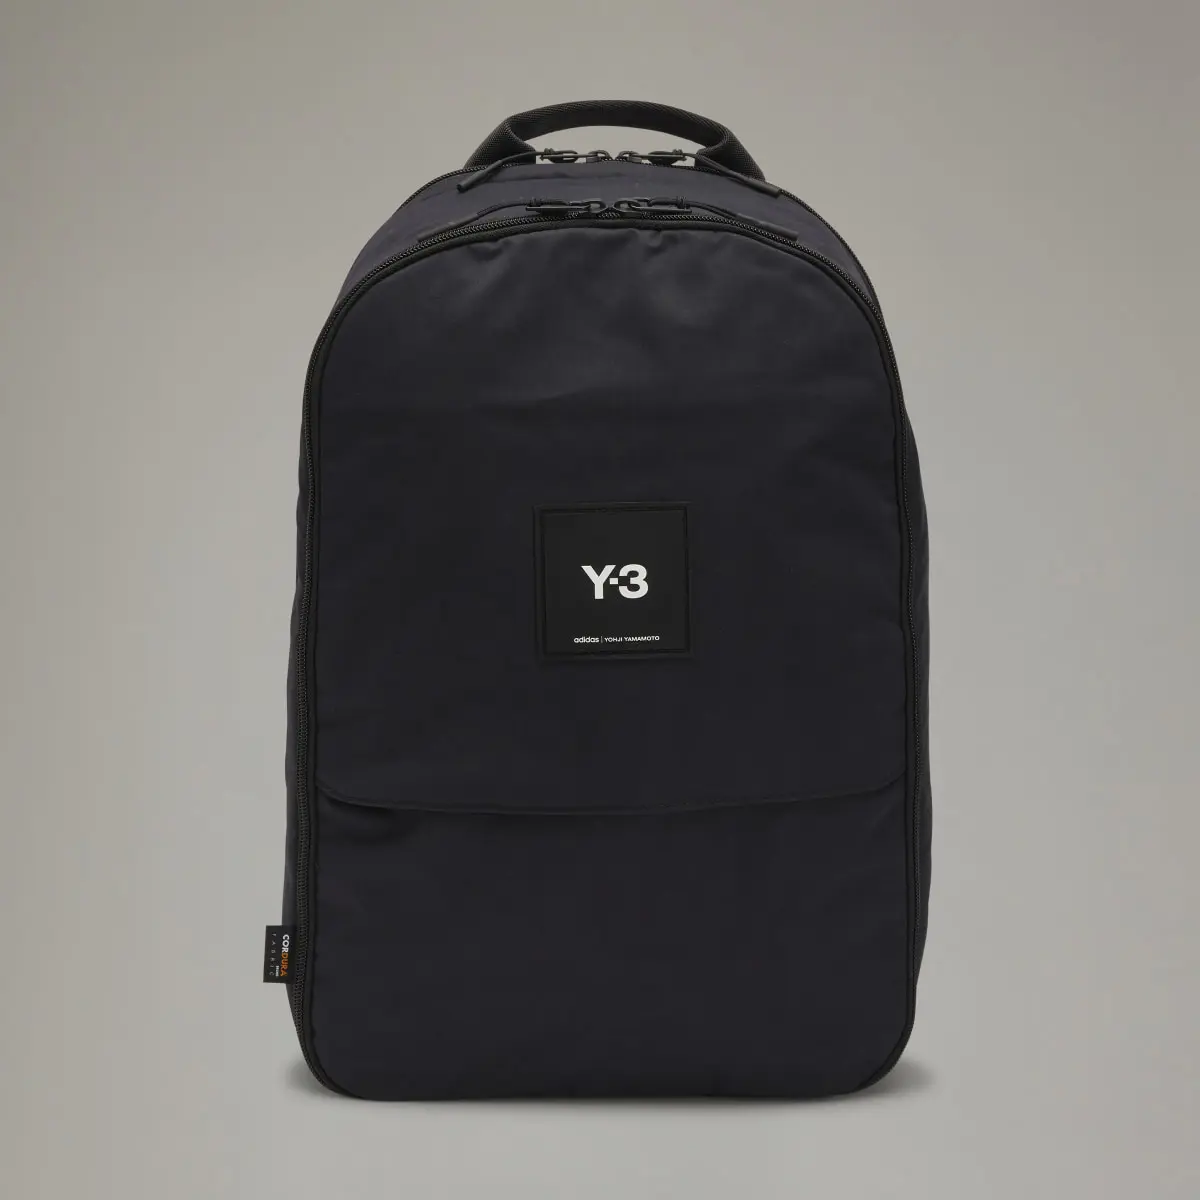 Adidas Y-3 Tech Backpack. 2